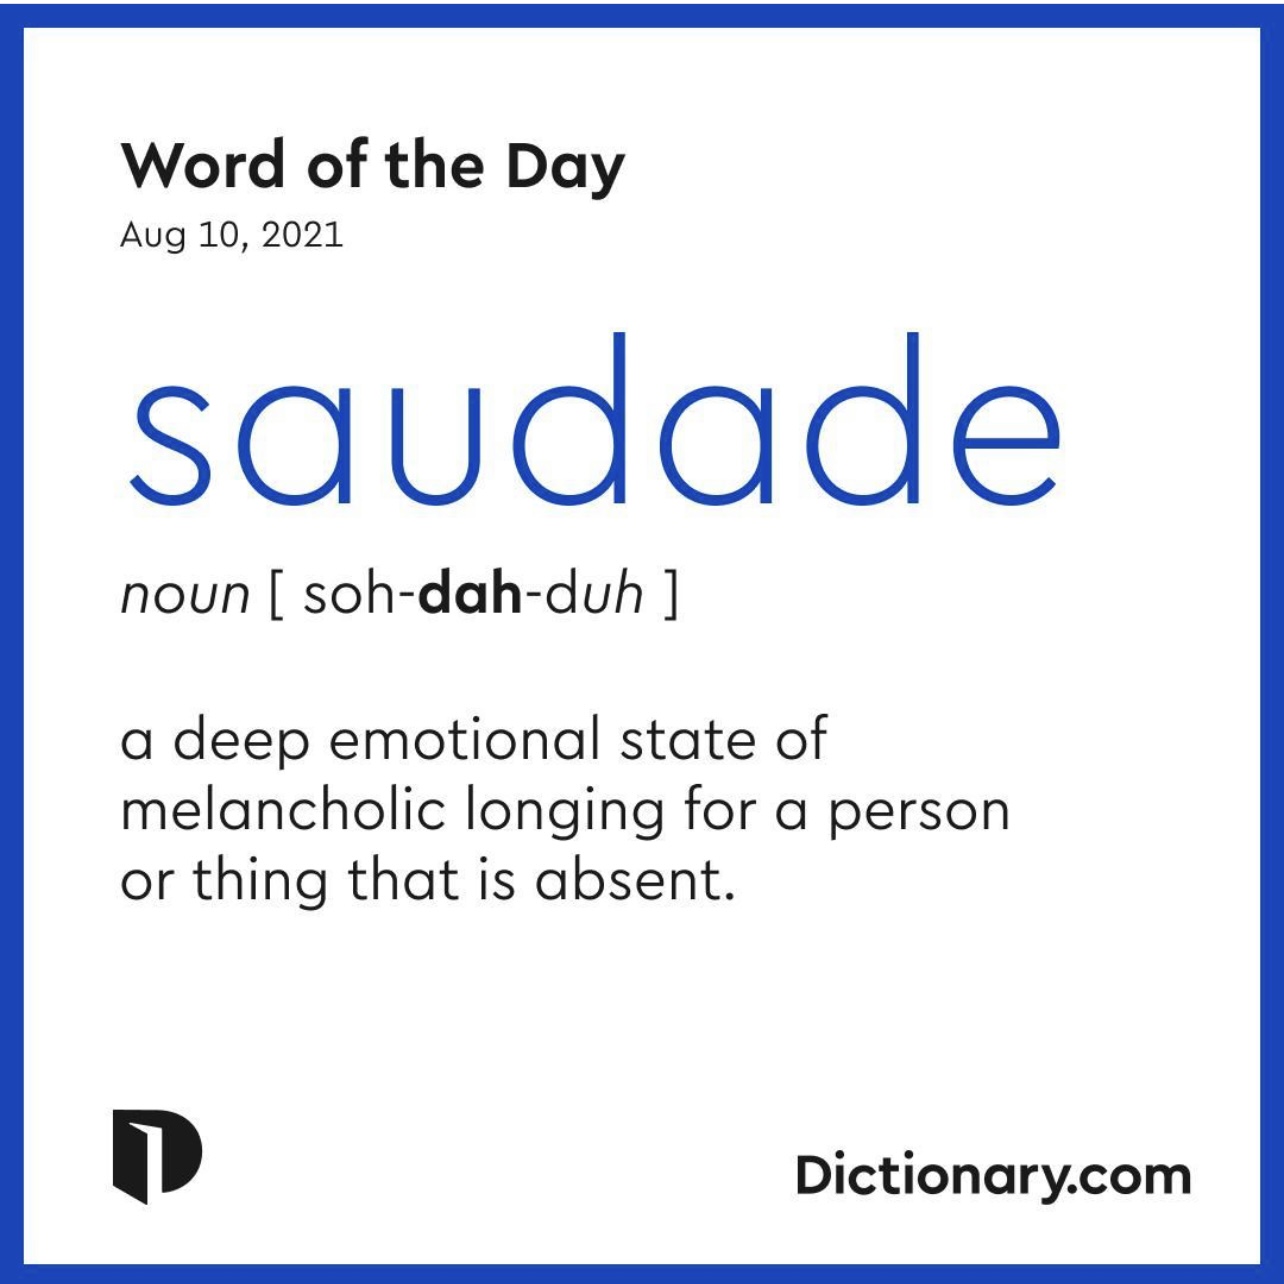 Word Nerd: Saudade